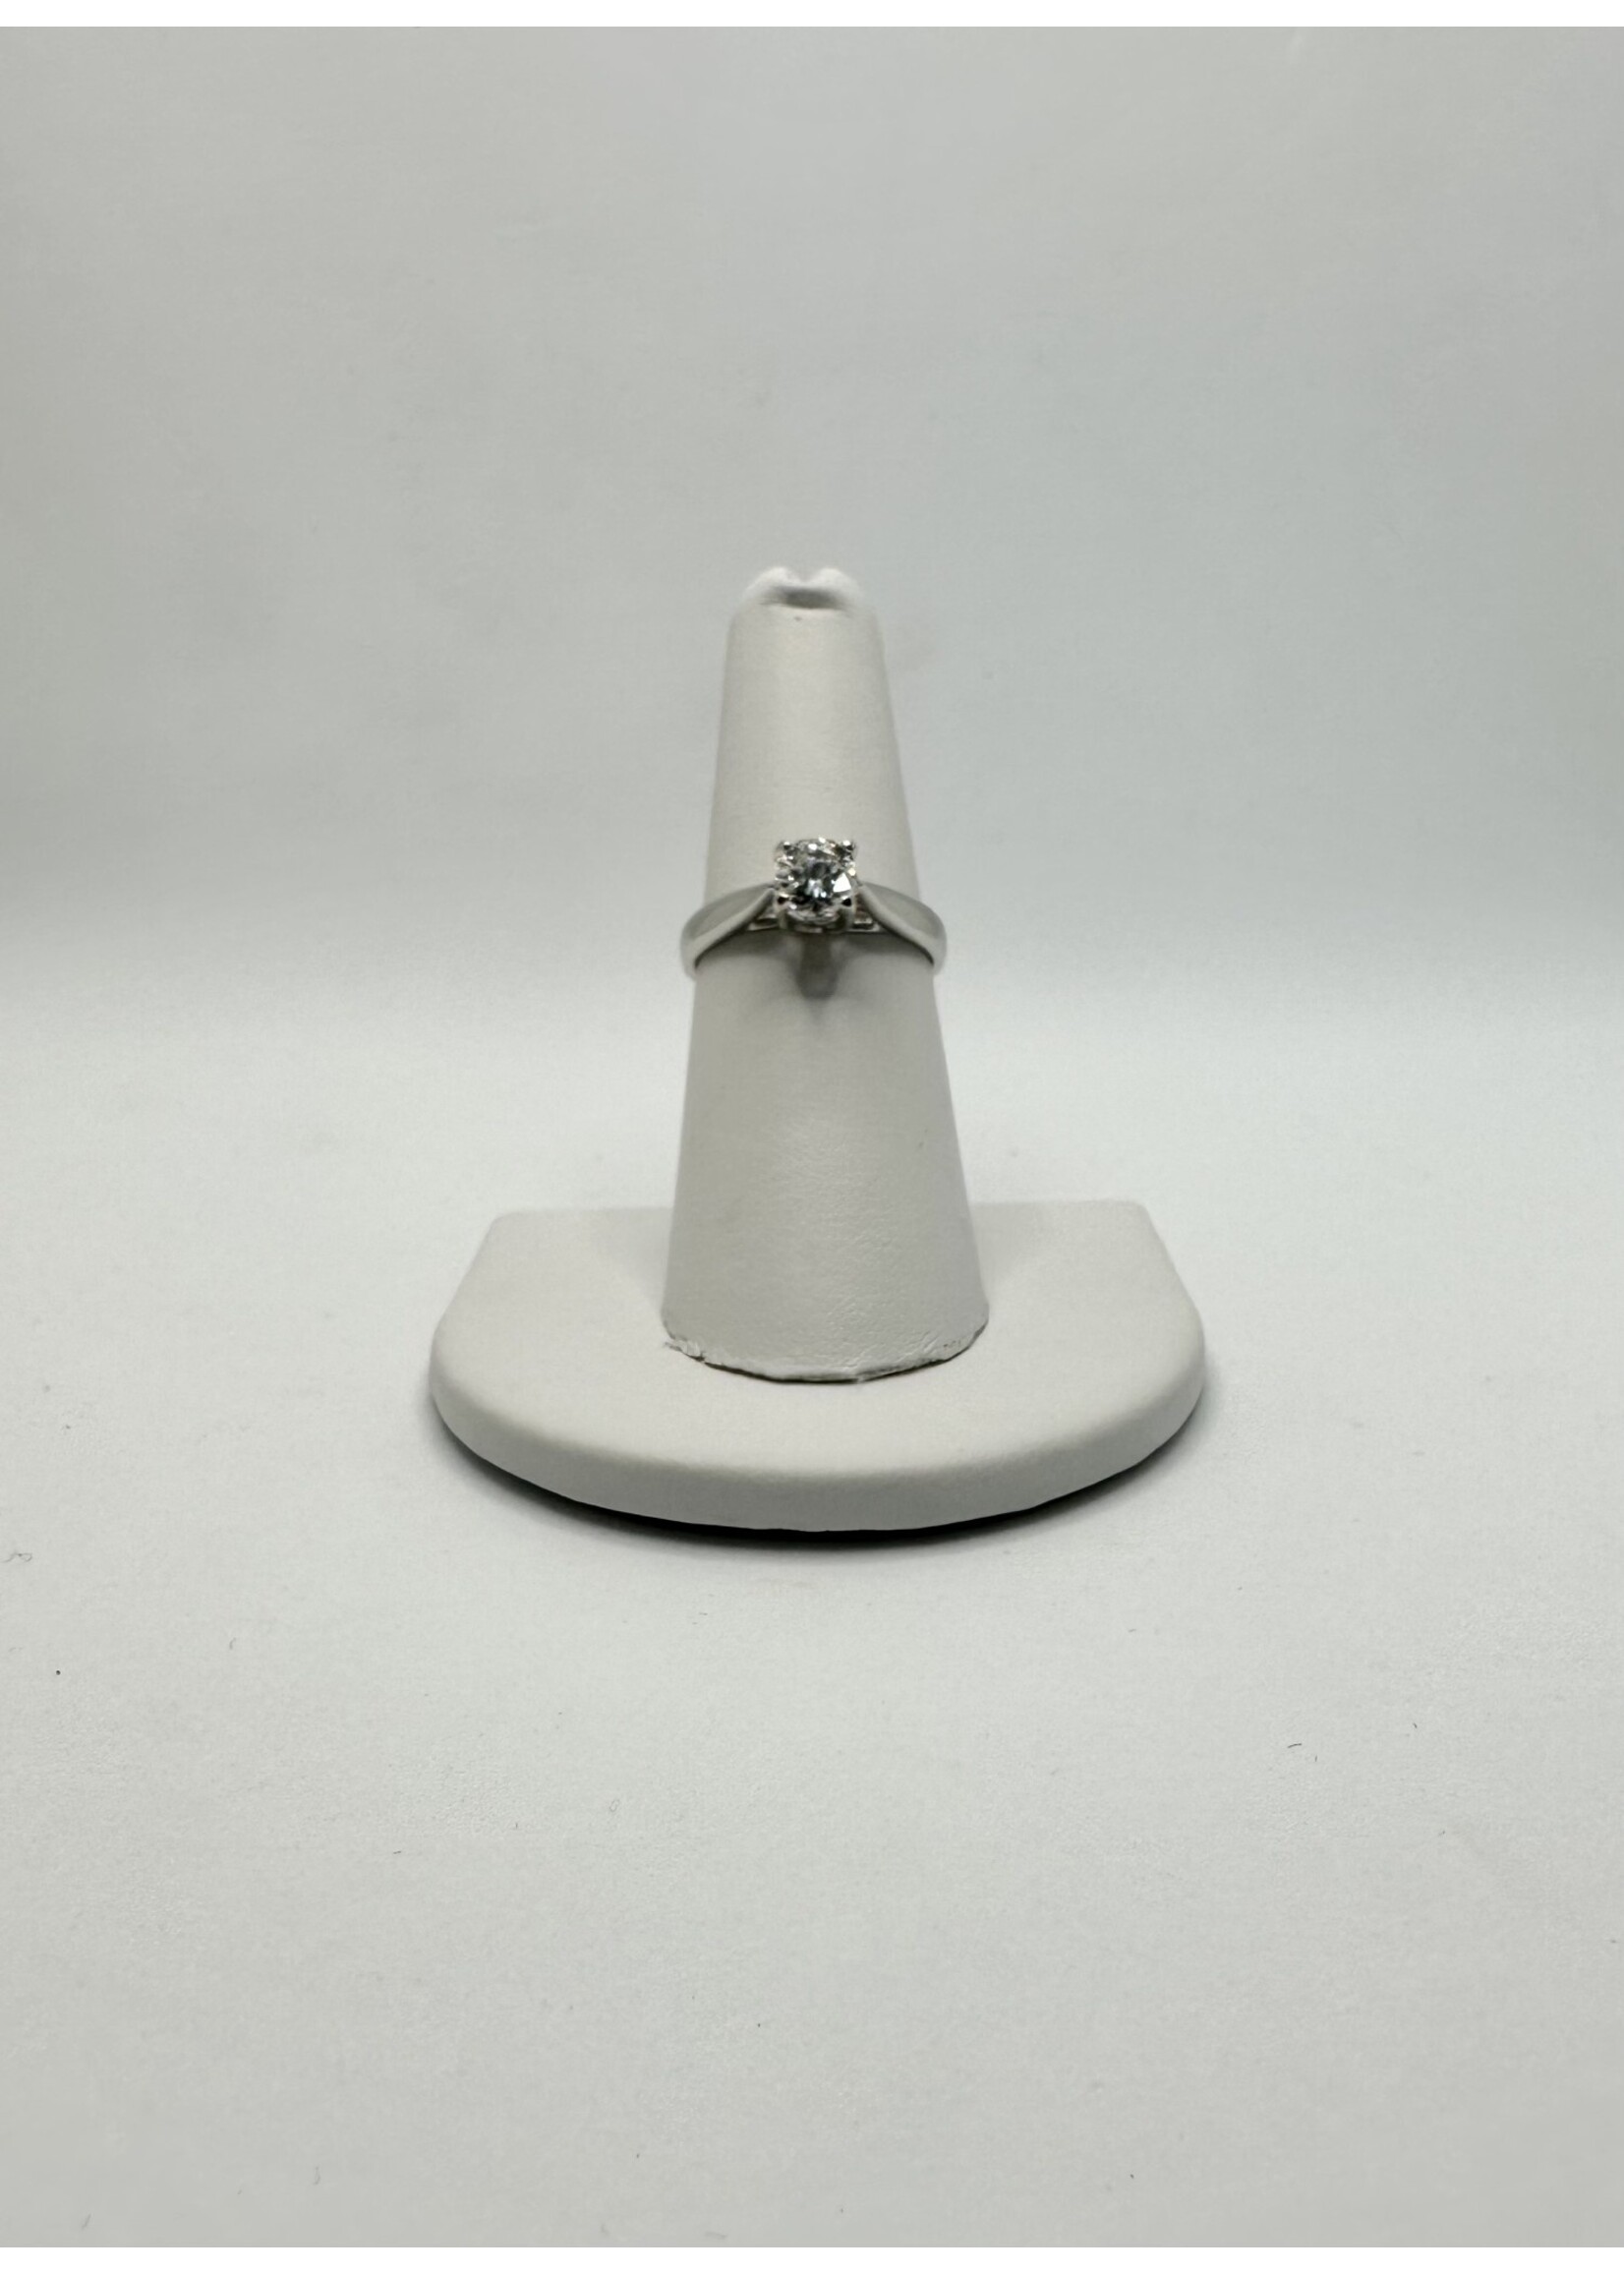 Octillian Diamond Solitaire Ring